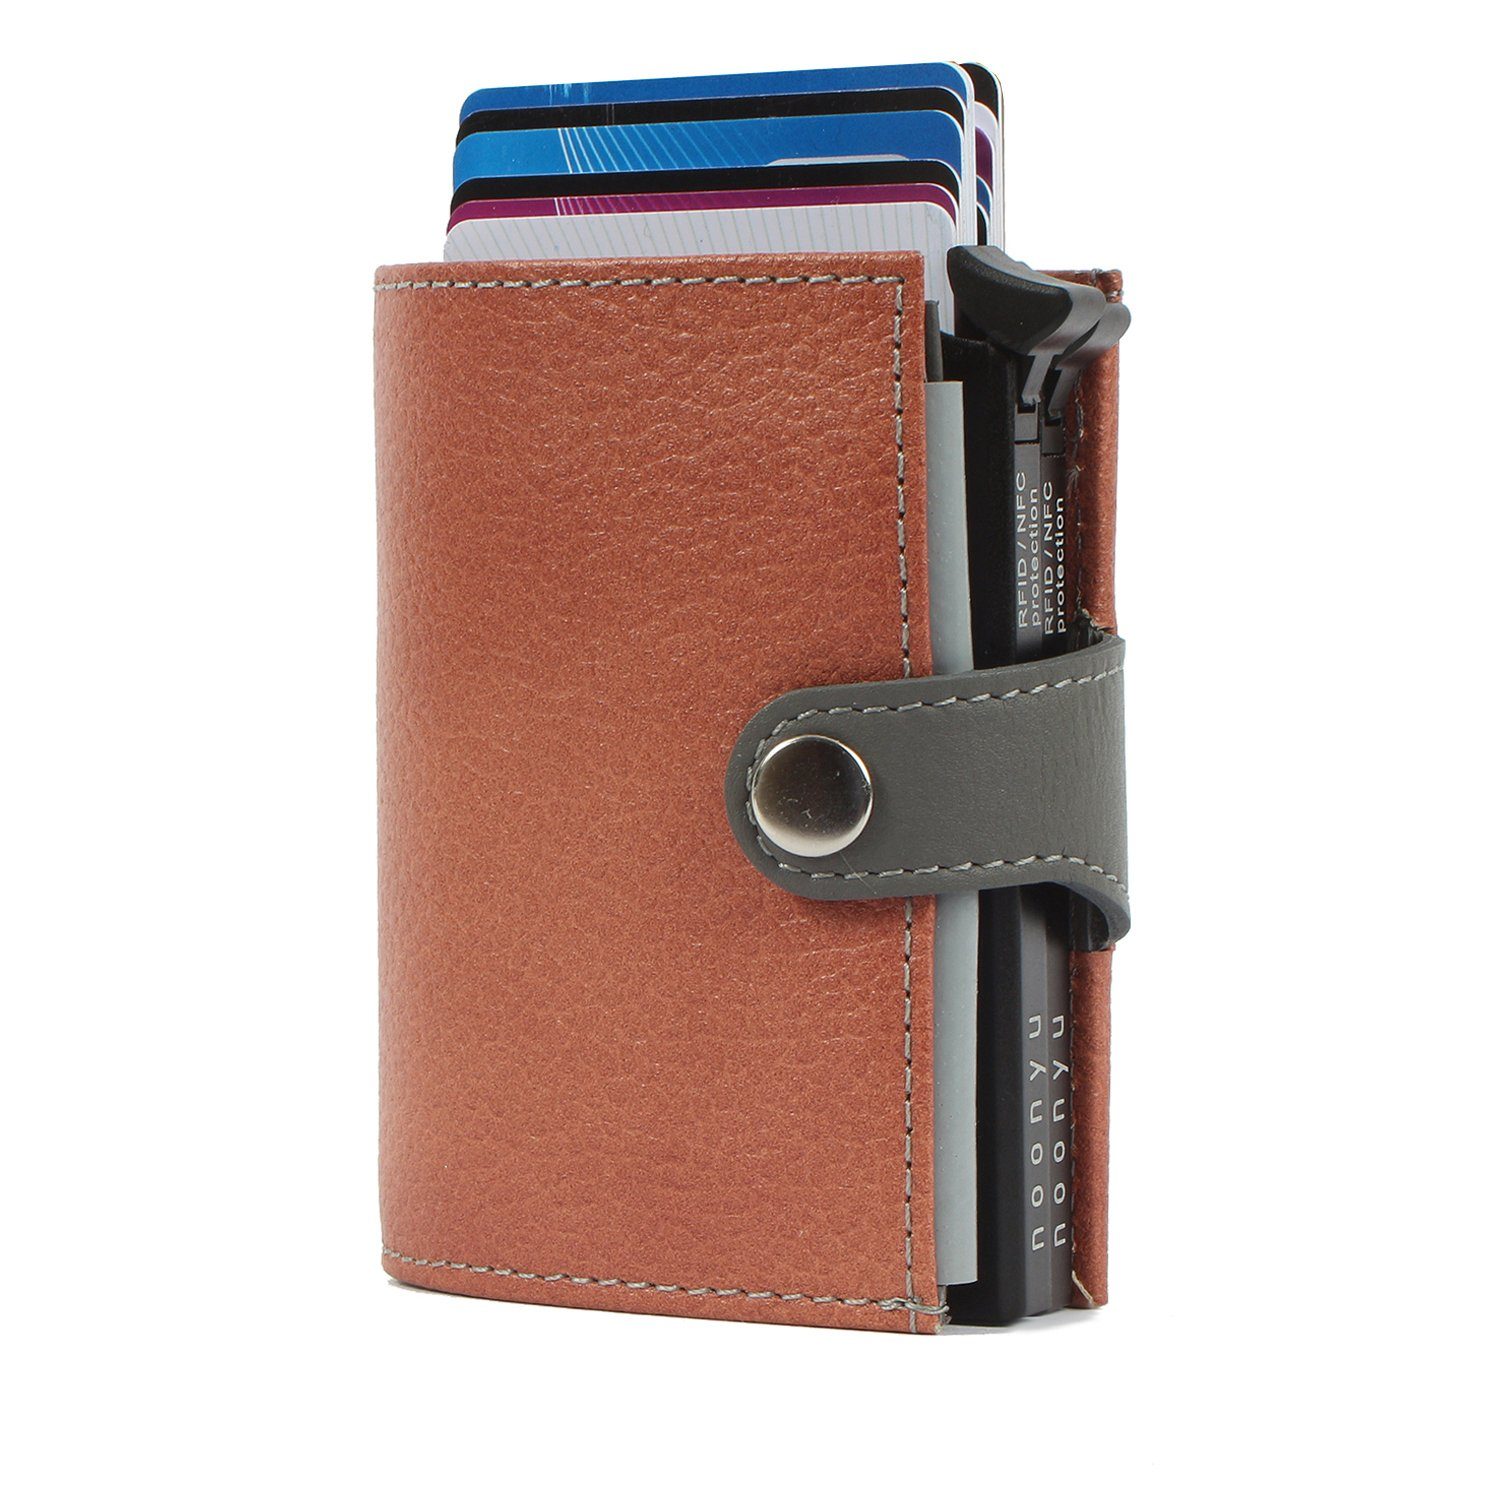 aus Mini leather, Geldbörse Upcycling Kreditkartenbörse Leder salmon noonyu RFID Margelisch double